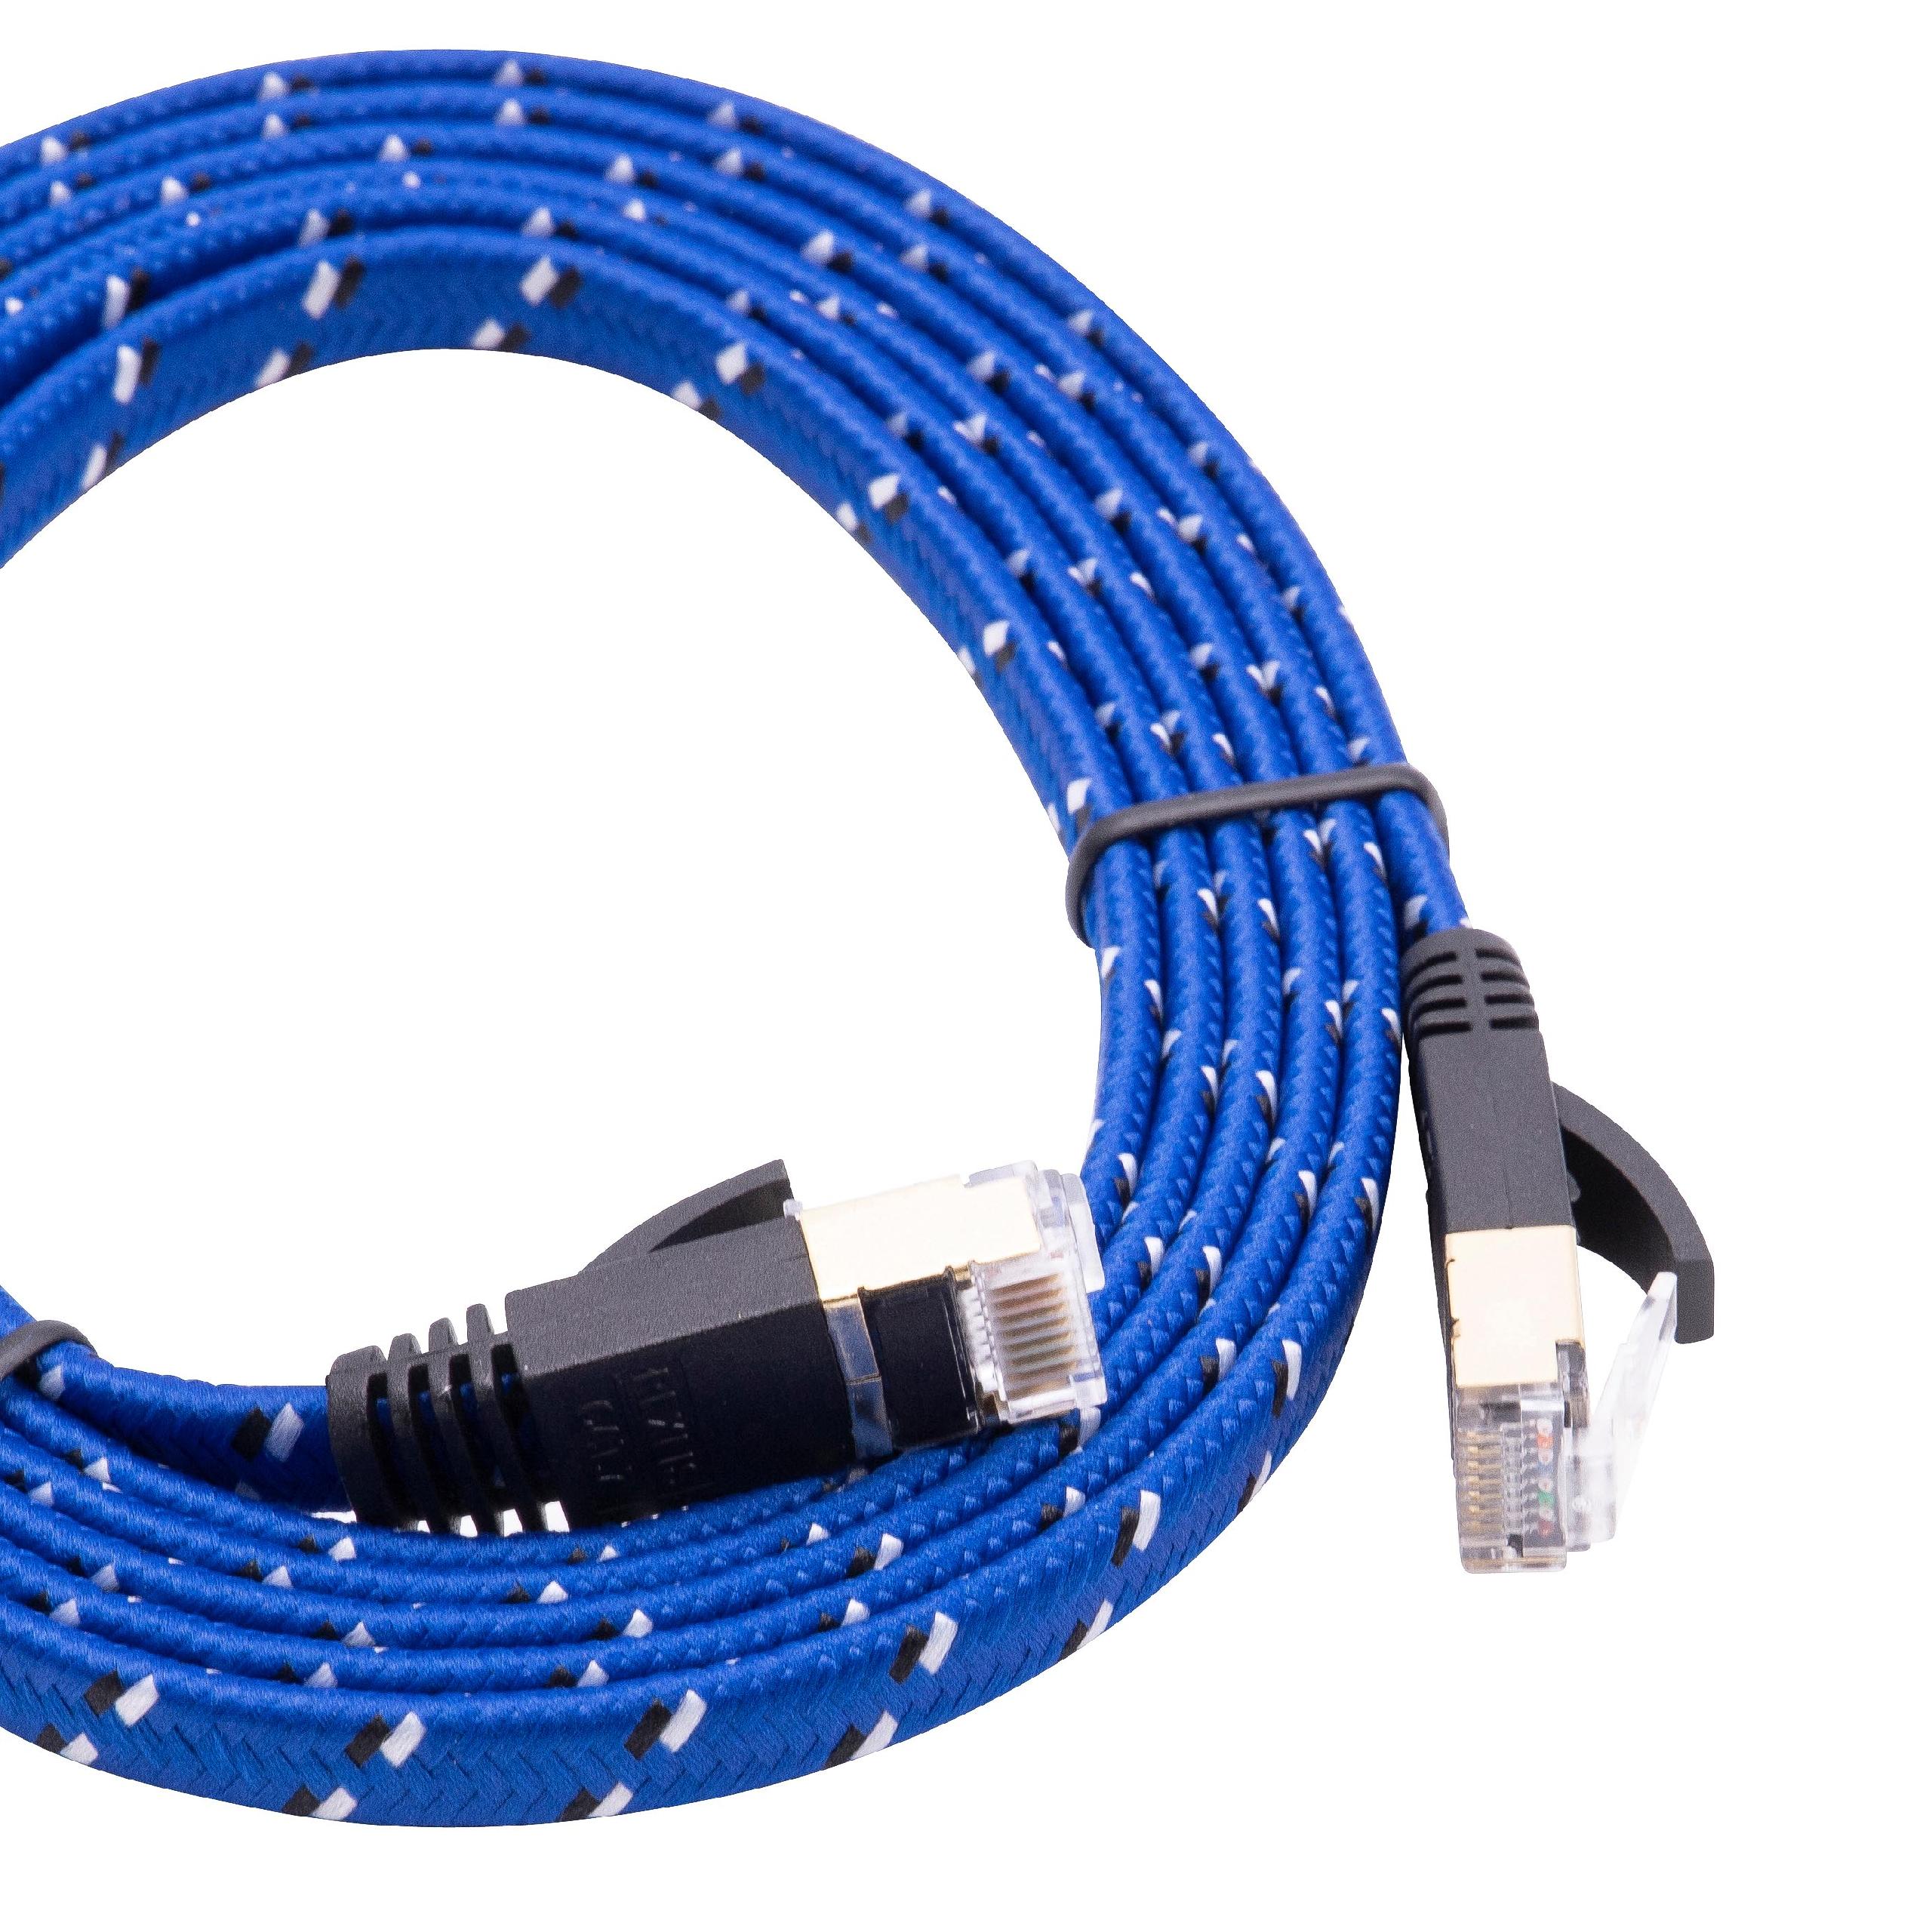 Cavo Ethernet, cavo di rete, cavo LAN, cavo patch Cat7 1,8m blu - cavo piatto